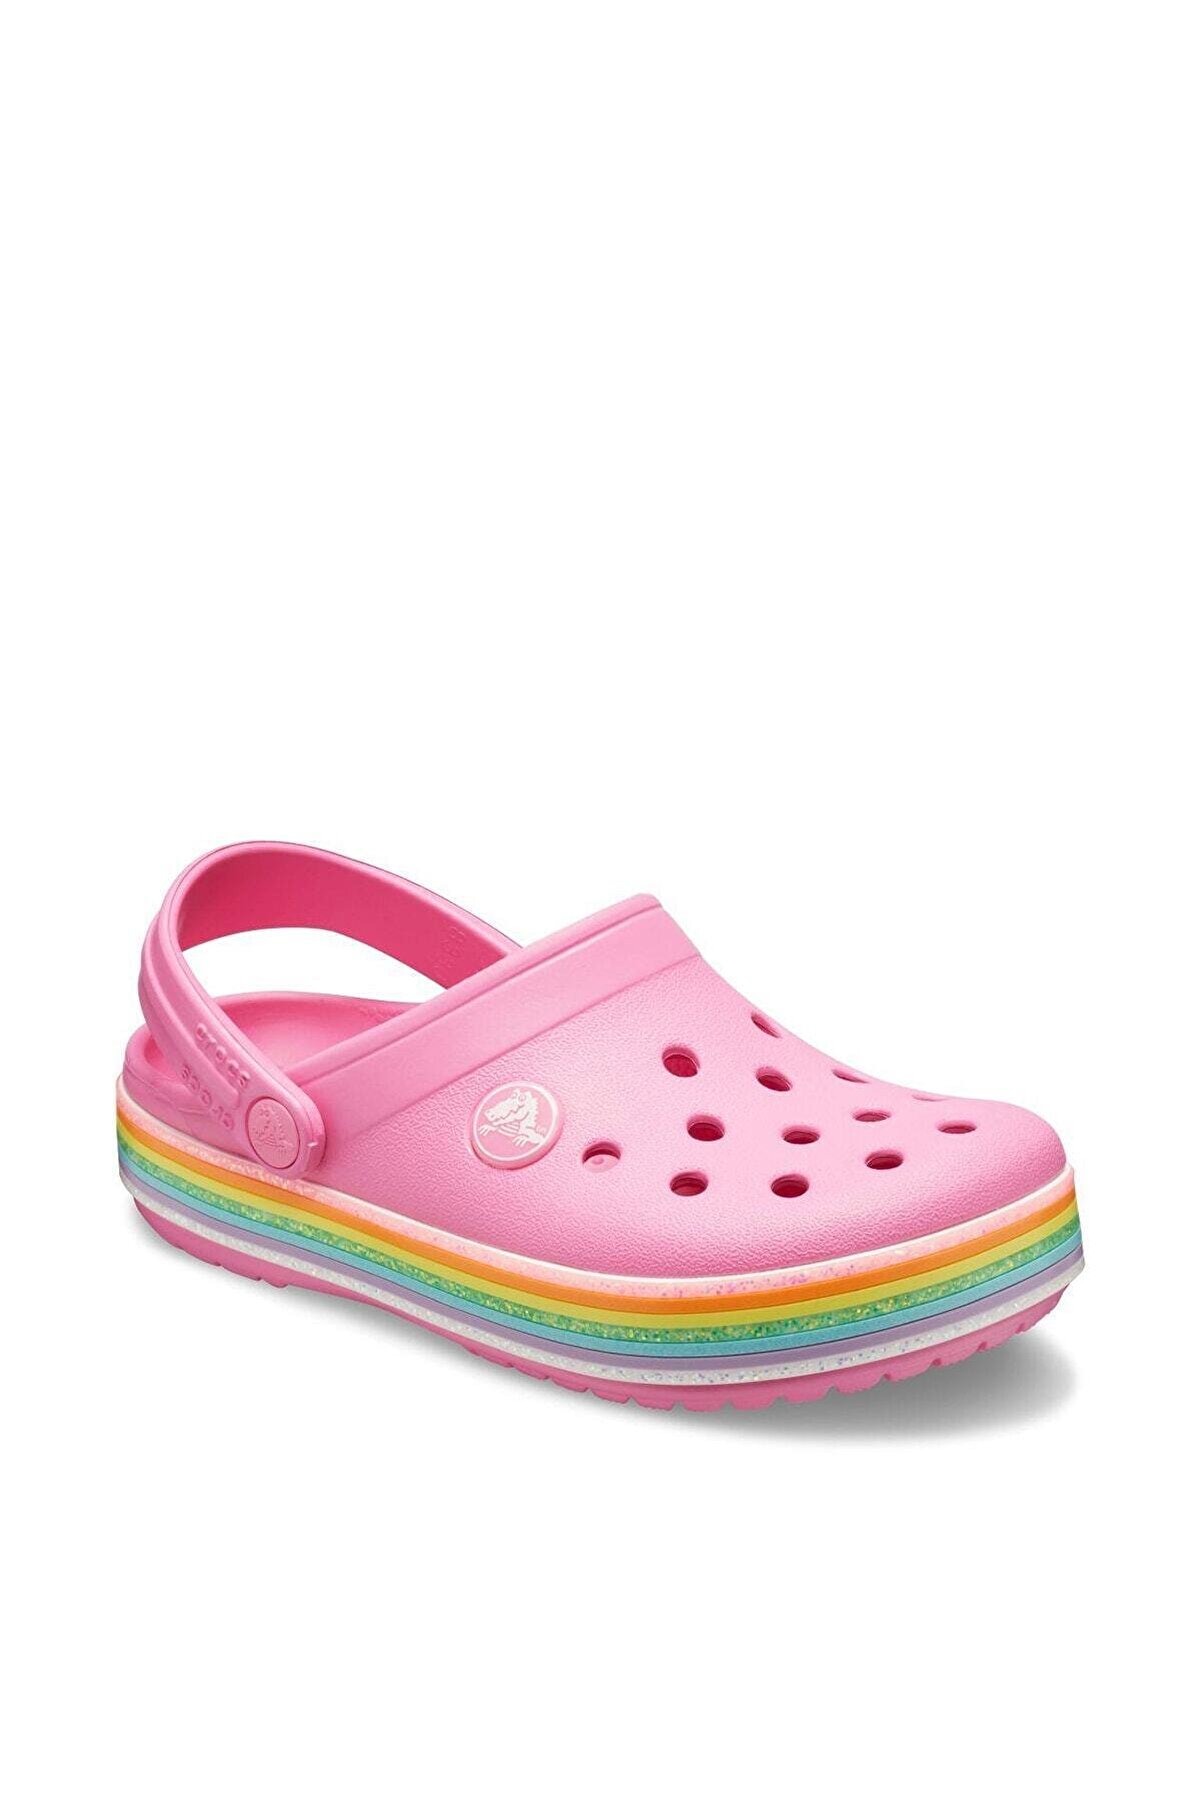 Crocs Kız Çocuk Pembe Spor Sandalet